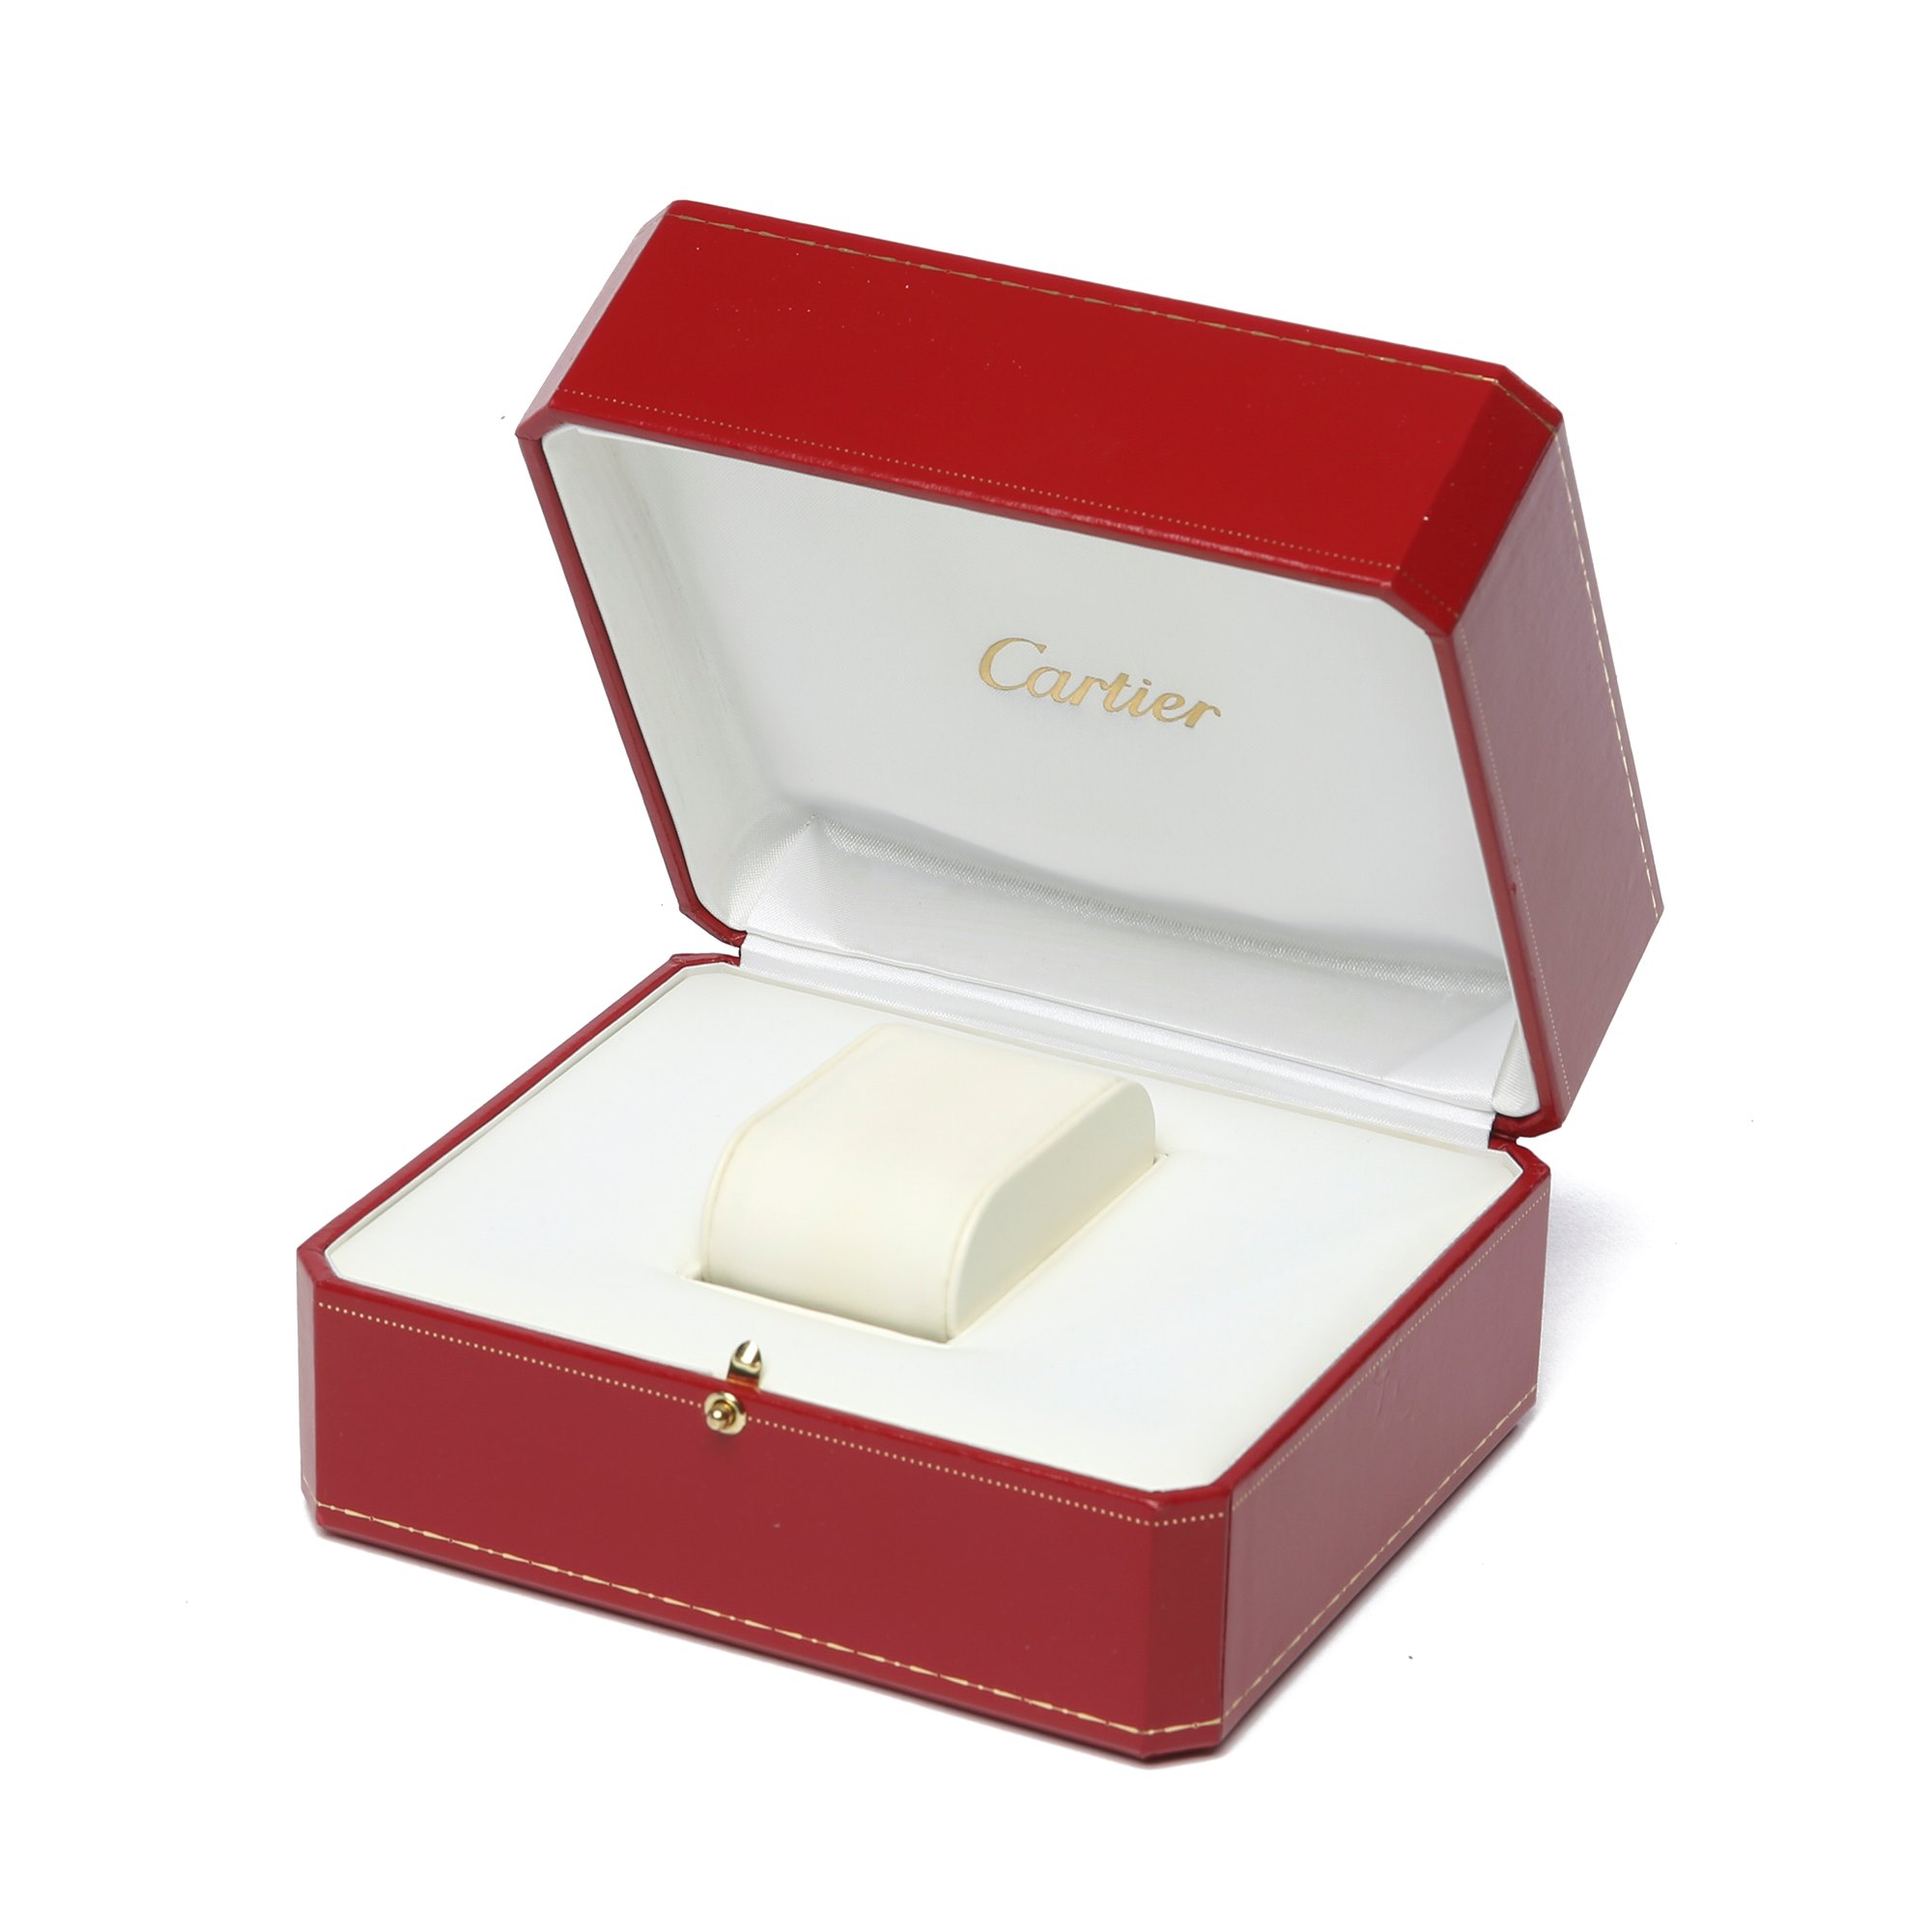 Cartier Vendome Paris 18K Yellow Gold 85521252 or 0033